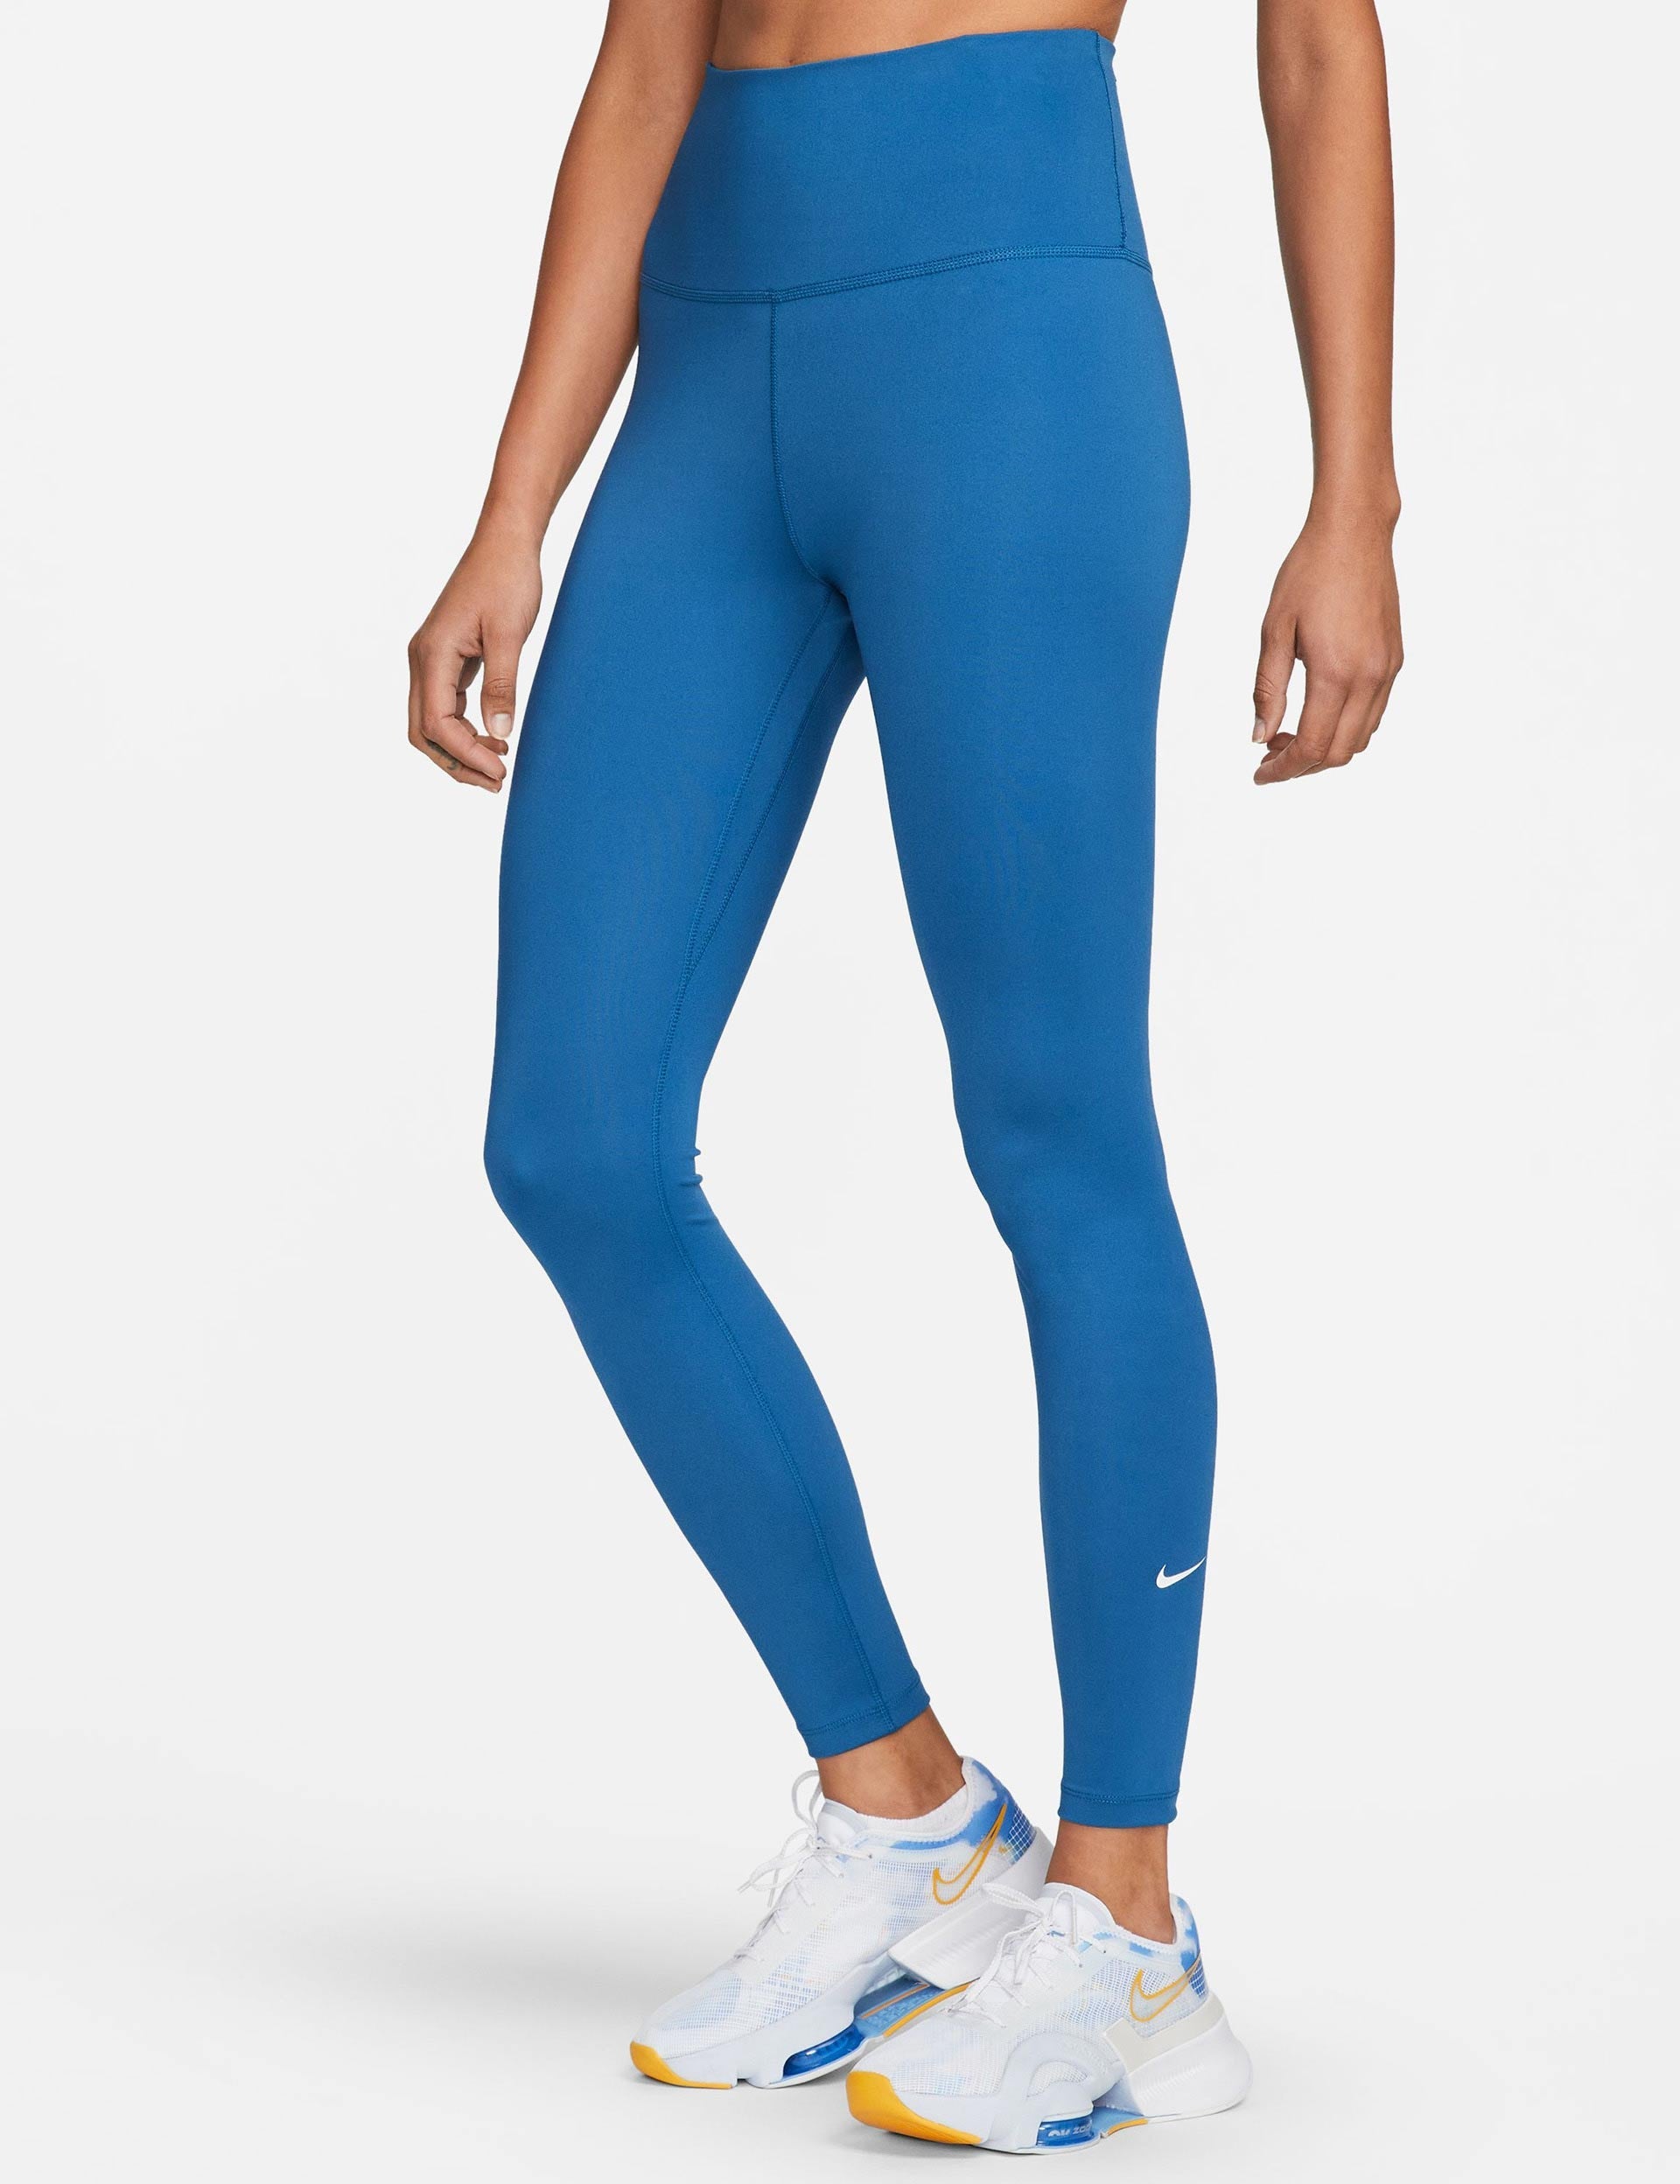 Nike Women's Legendary Print Dri-Fit Training Tights Royal Blue